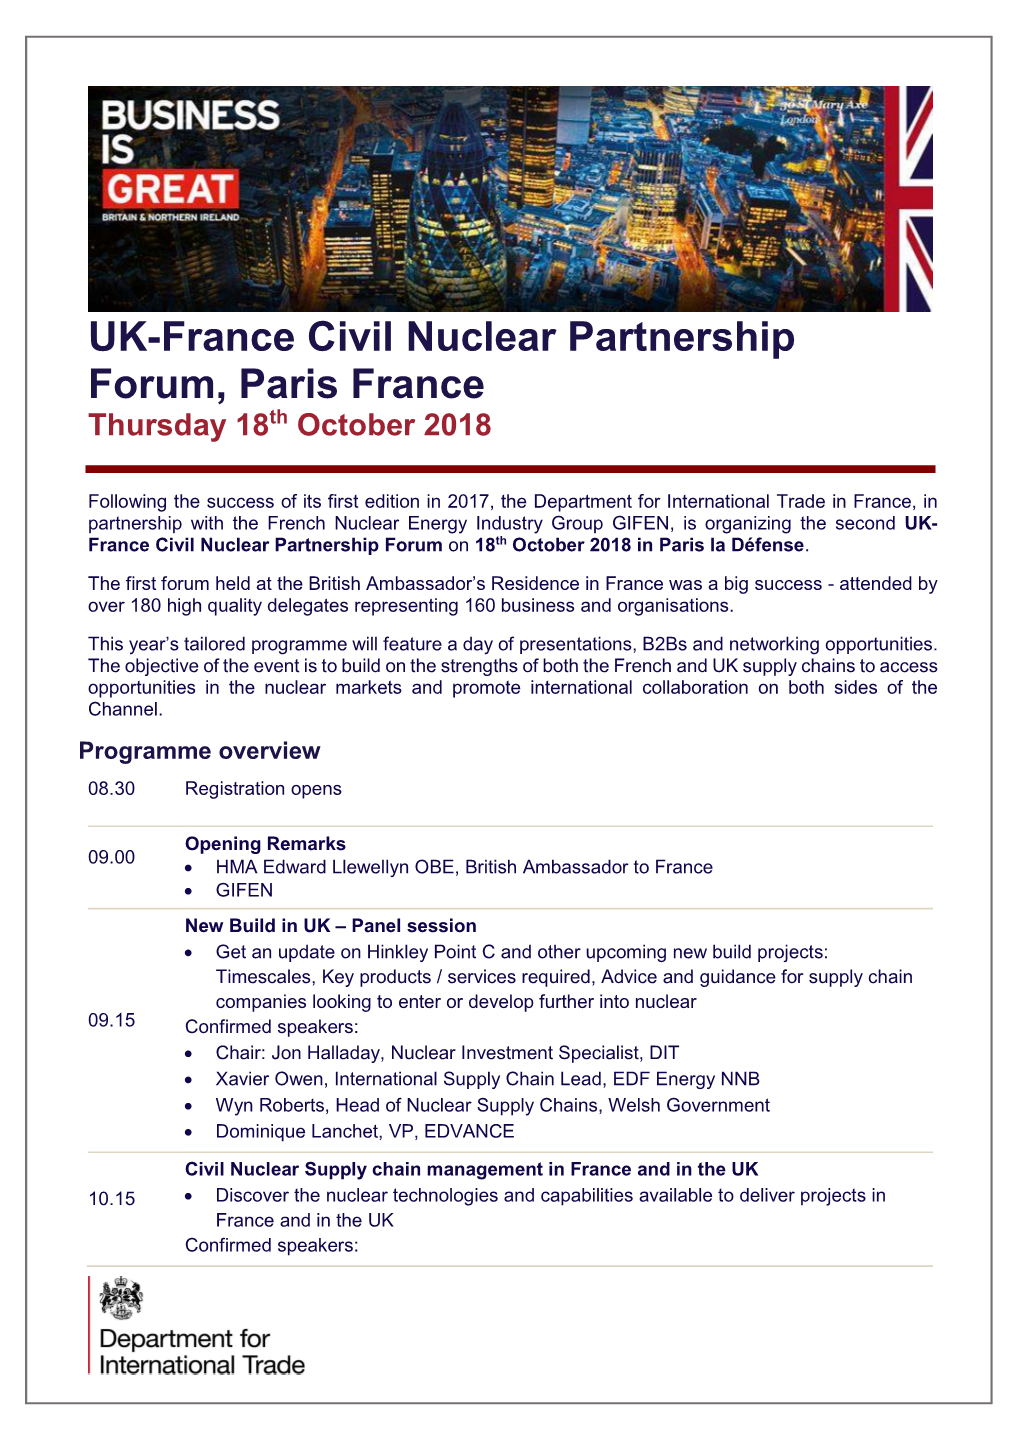 UK-France Civil Nuclear Partnership Forum, Paris France